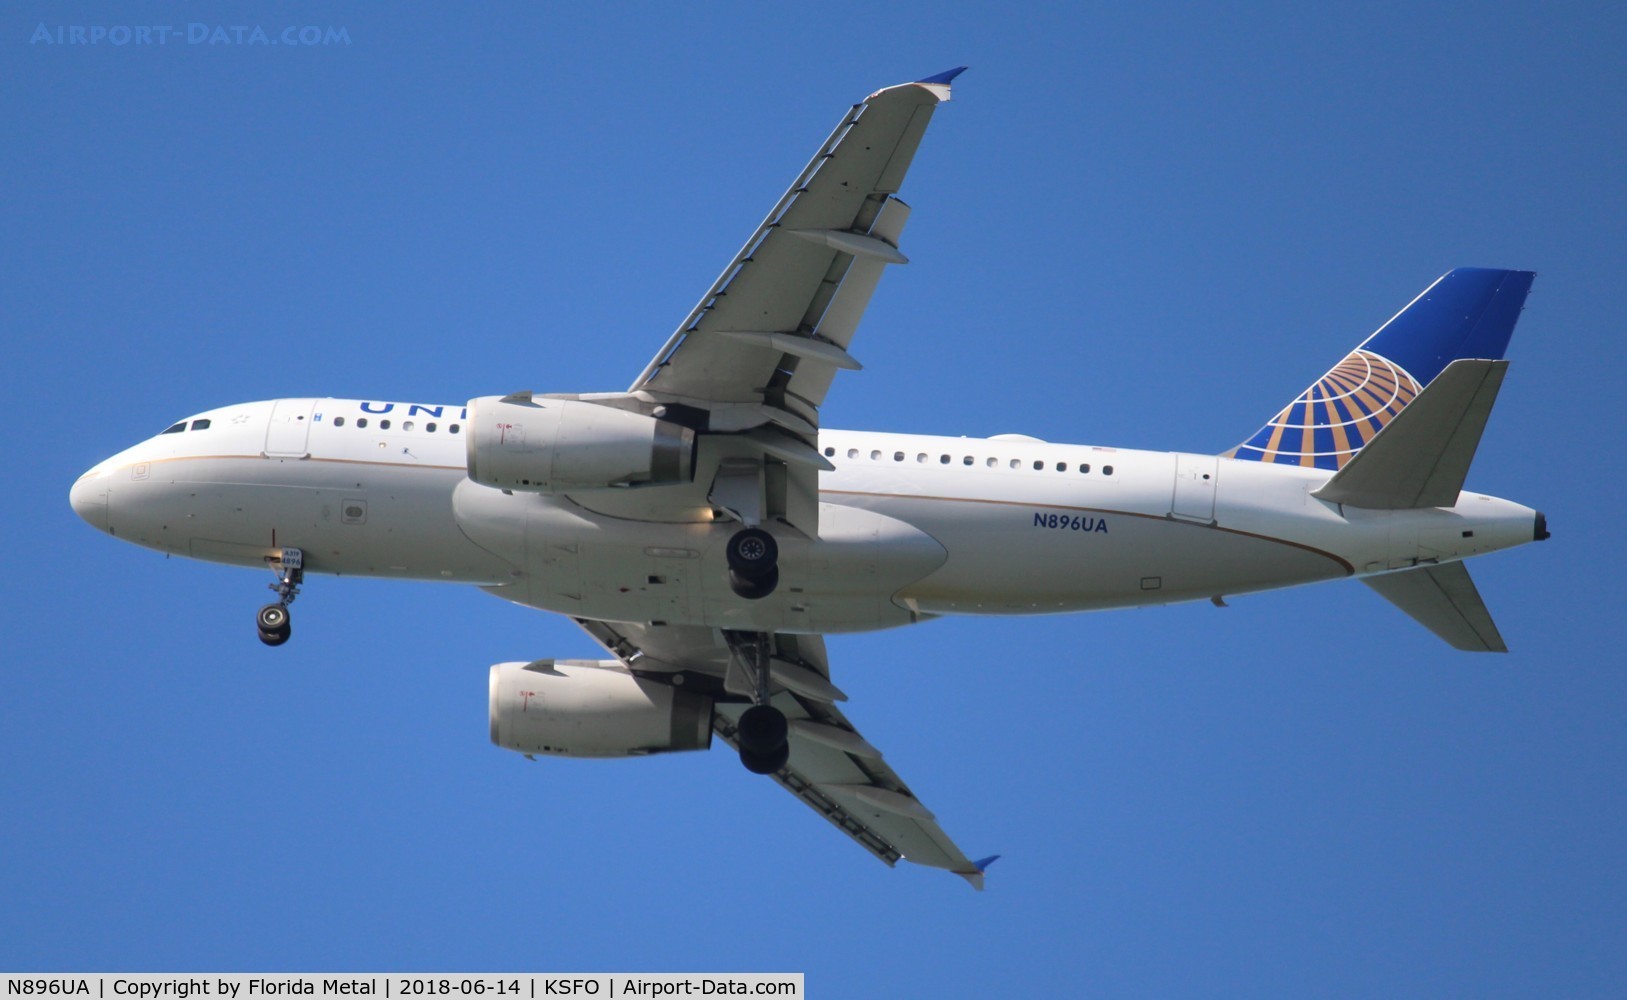 N896UA, 2007 Airbus A319-132 C/N 3144, SFO spotting 2018